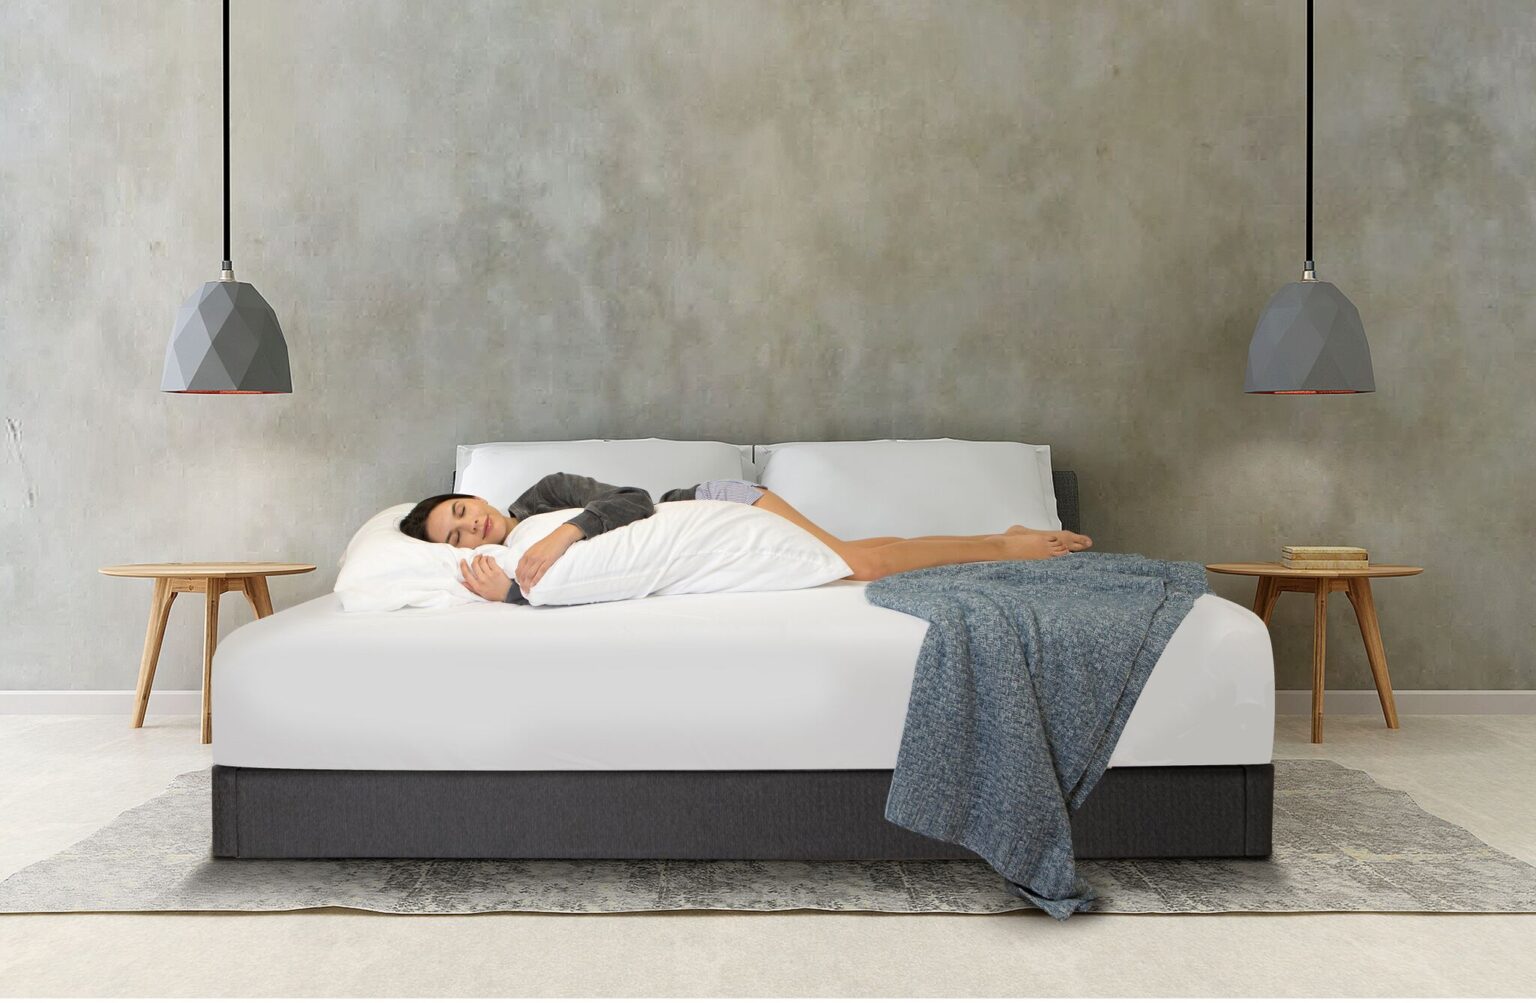 pregnant sleep mattress topper 2 or 3 inch